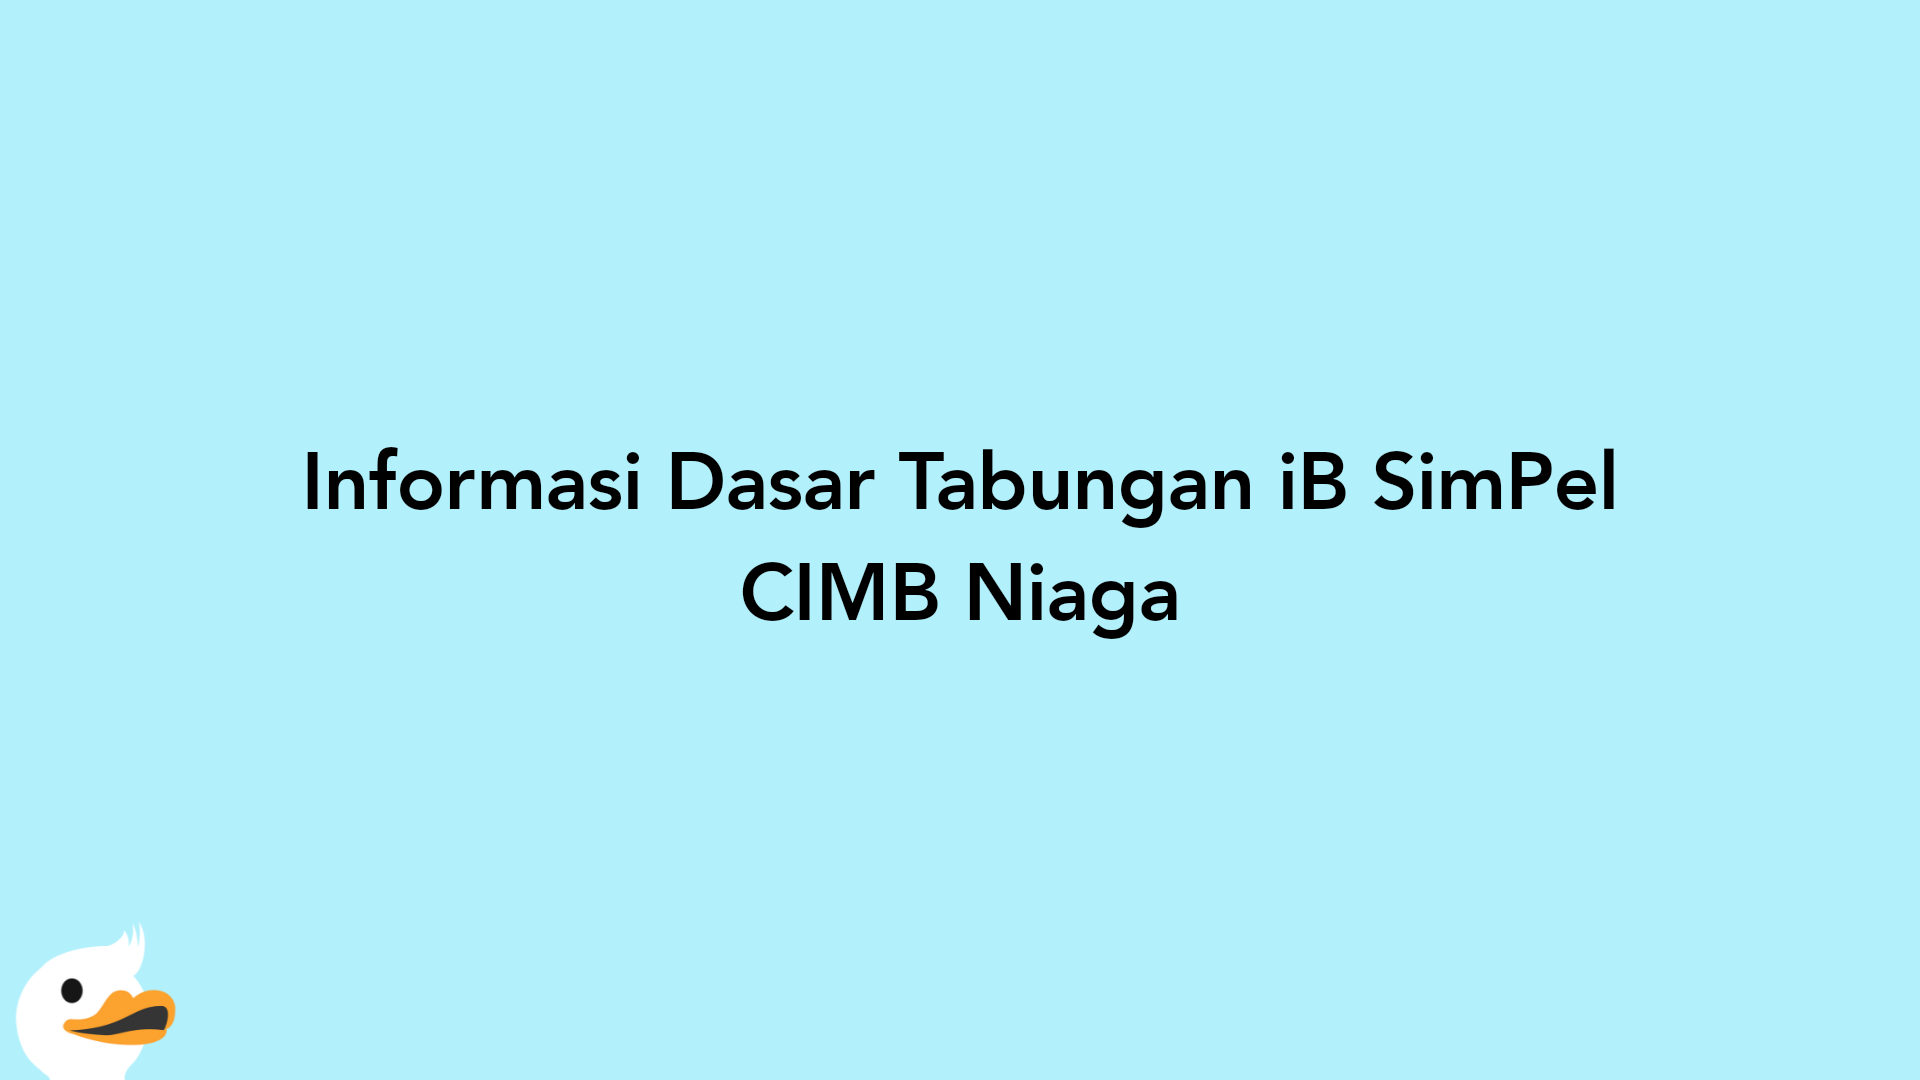 Informasi Dasar Tabungan iB SimPel CIMB Niaga